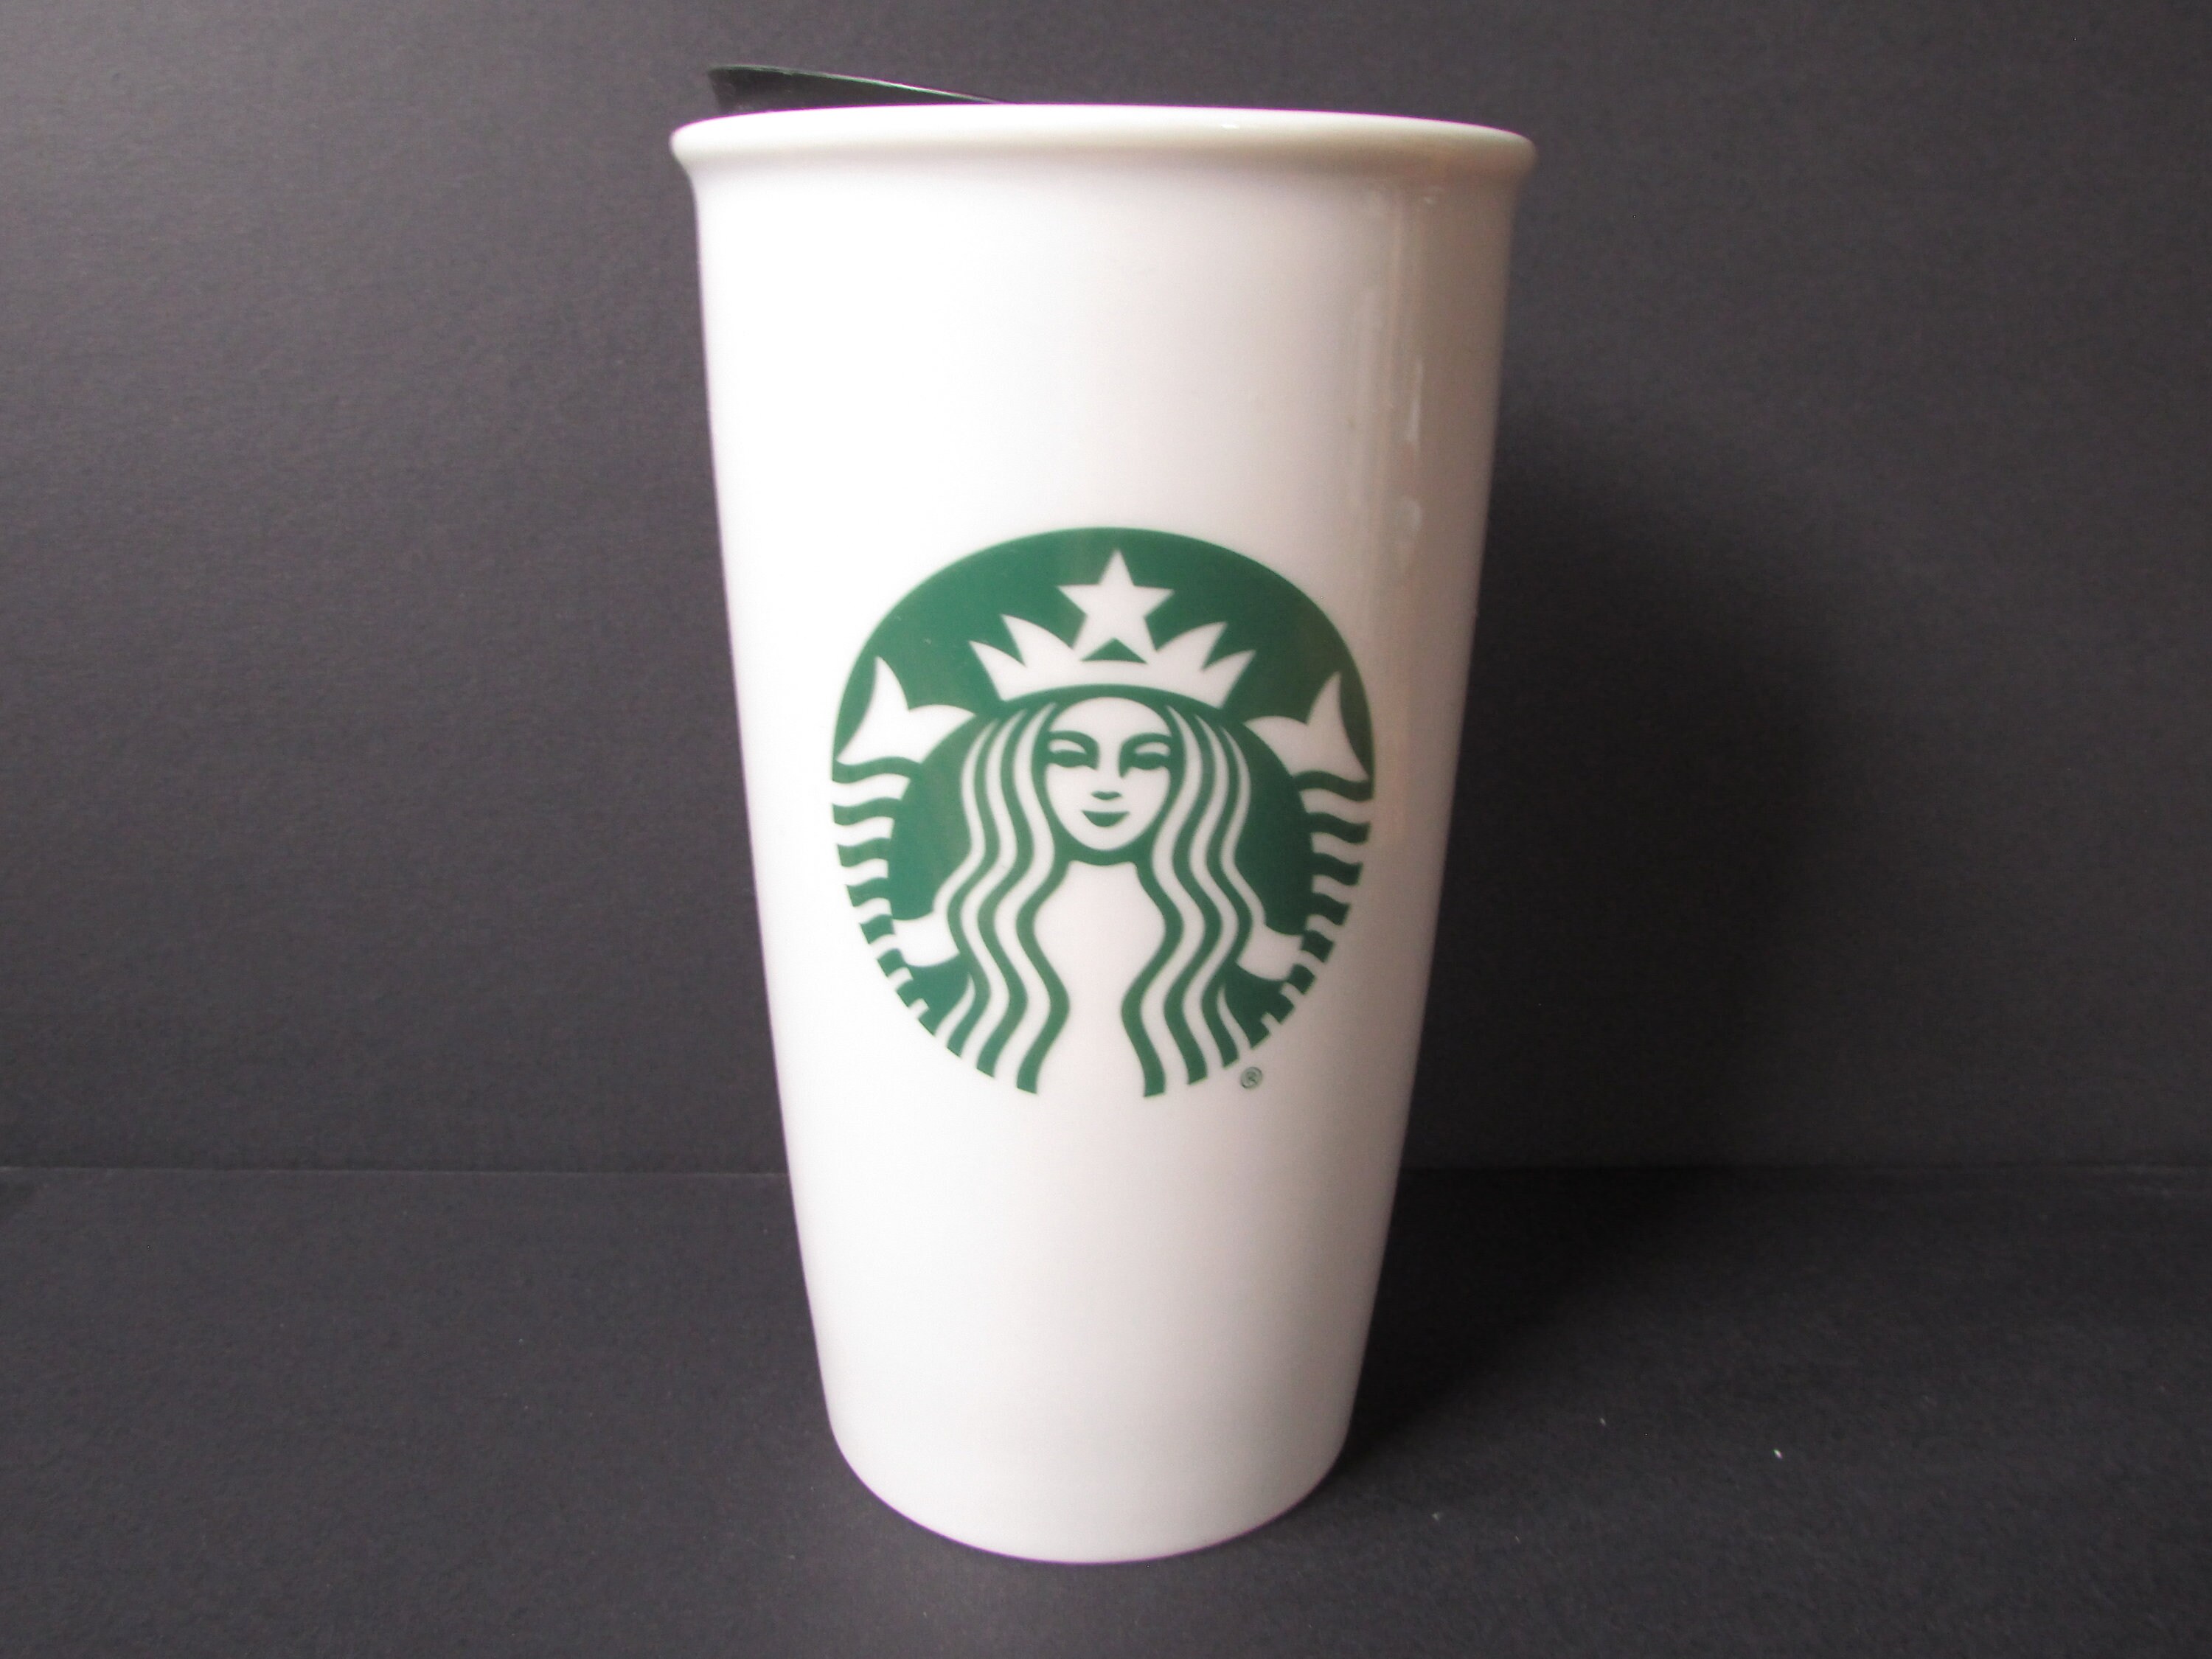  Starbucks White Reusable Travel Mug/Cup/Tumbler Grande Medium,  16oz 473ml : Home & Kitchen